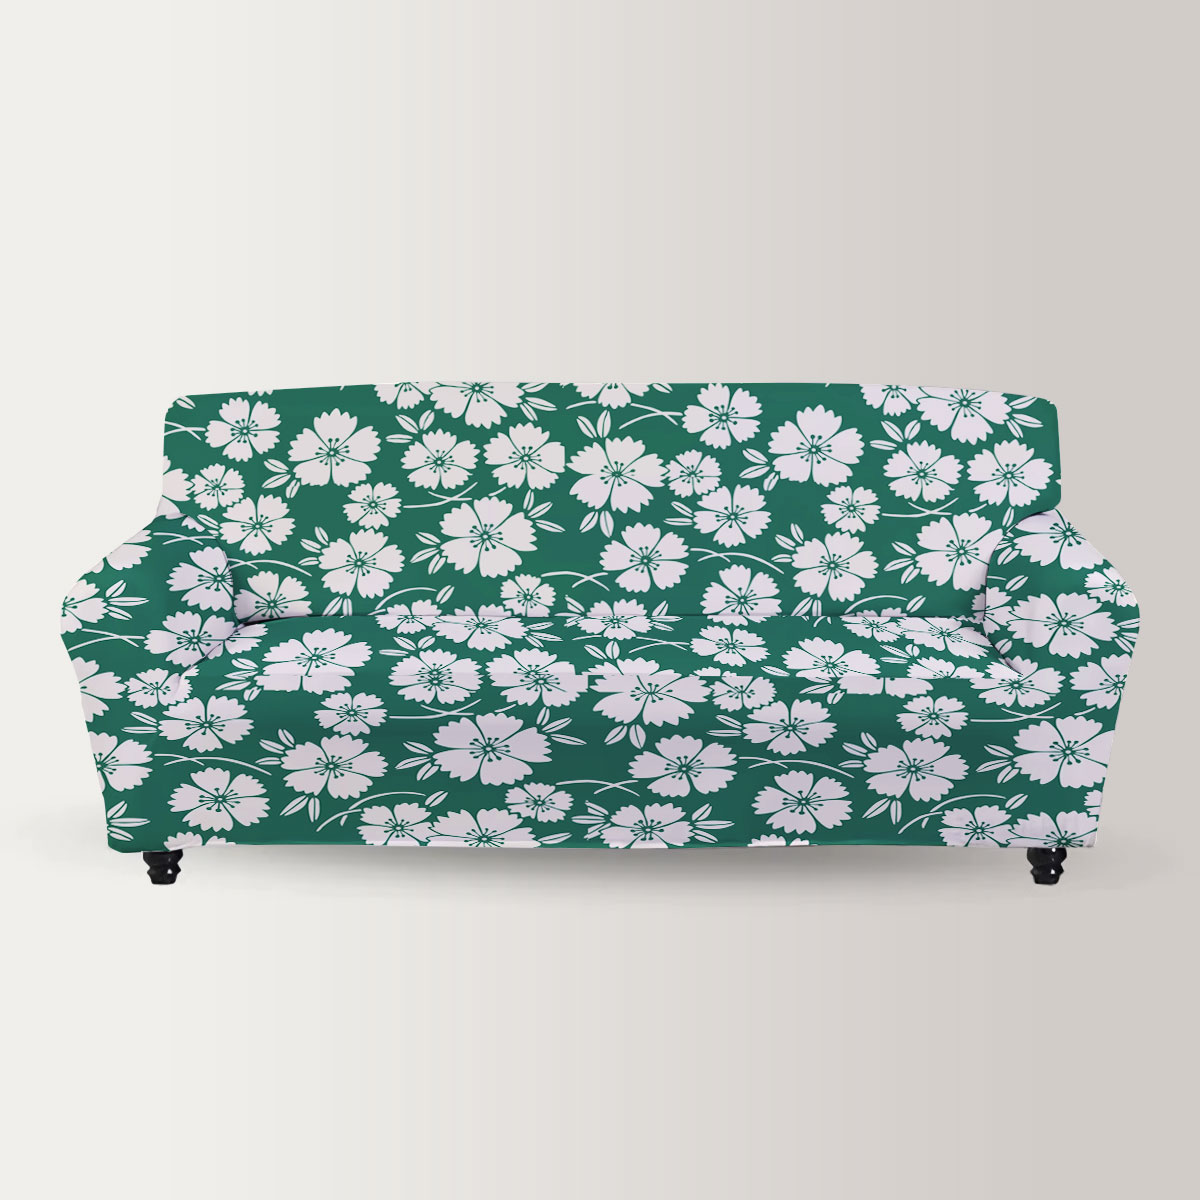 Japanese White Carnations Sofa Cover